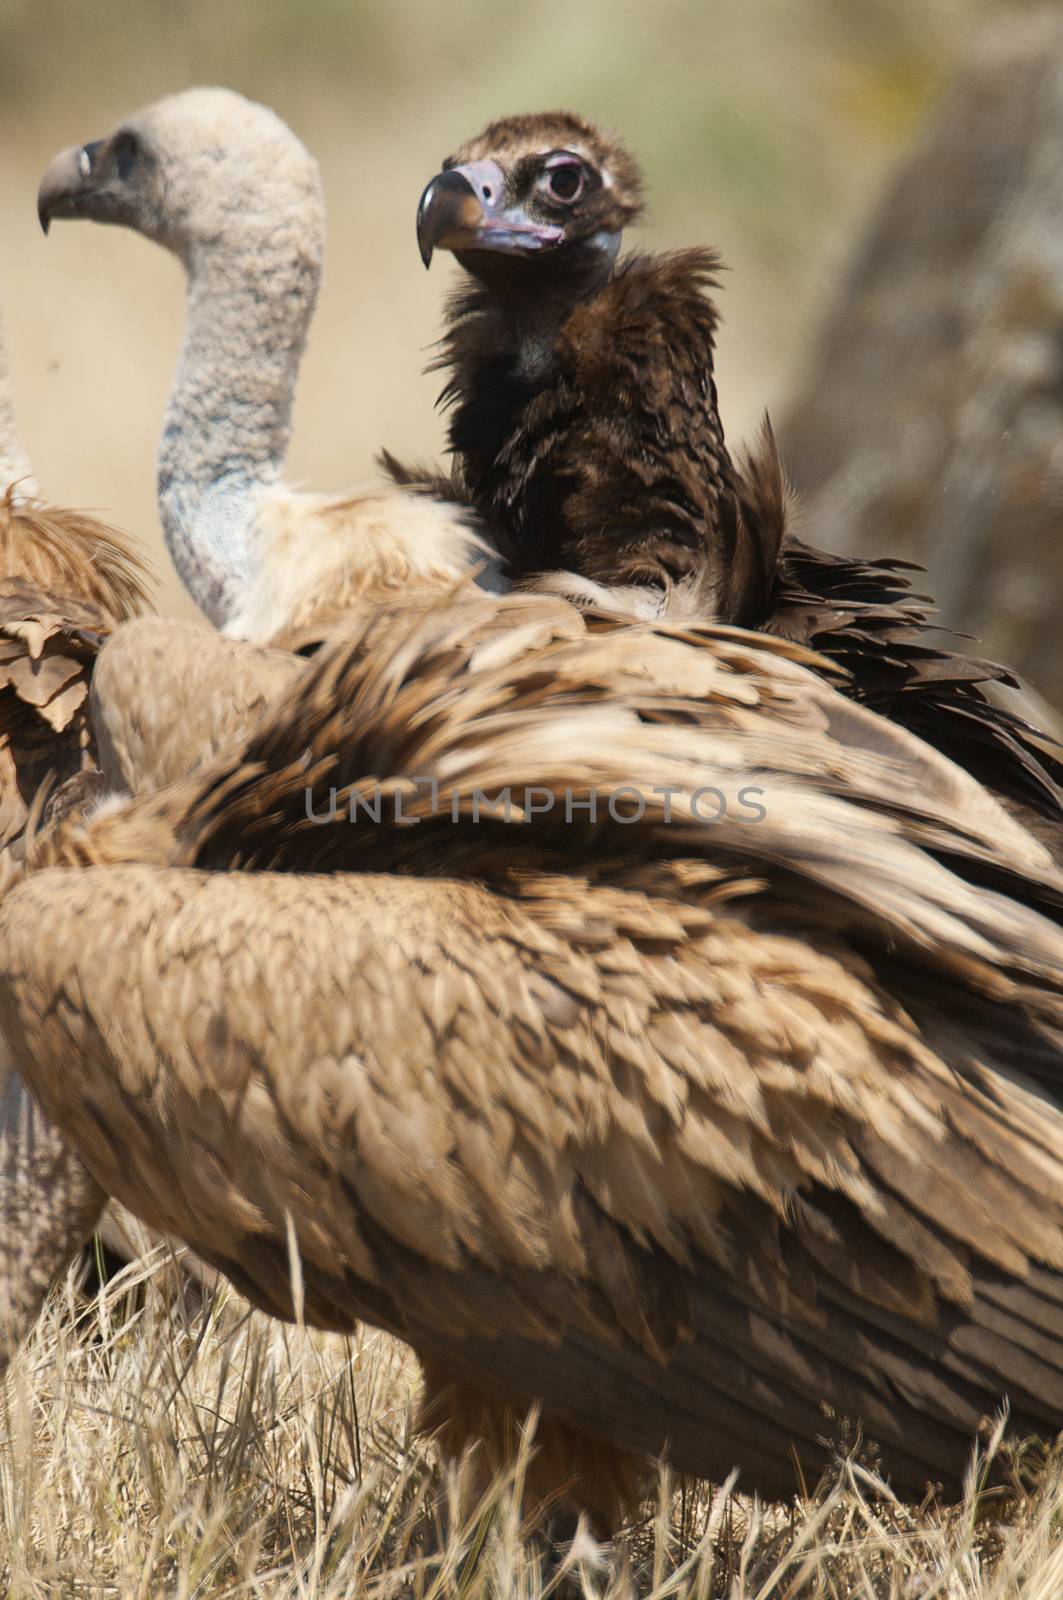 Griffon Vulture, Gyps fulvus, Black Vulture or Cinereous Vulture by jalonsohu@gmail.com